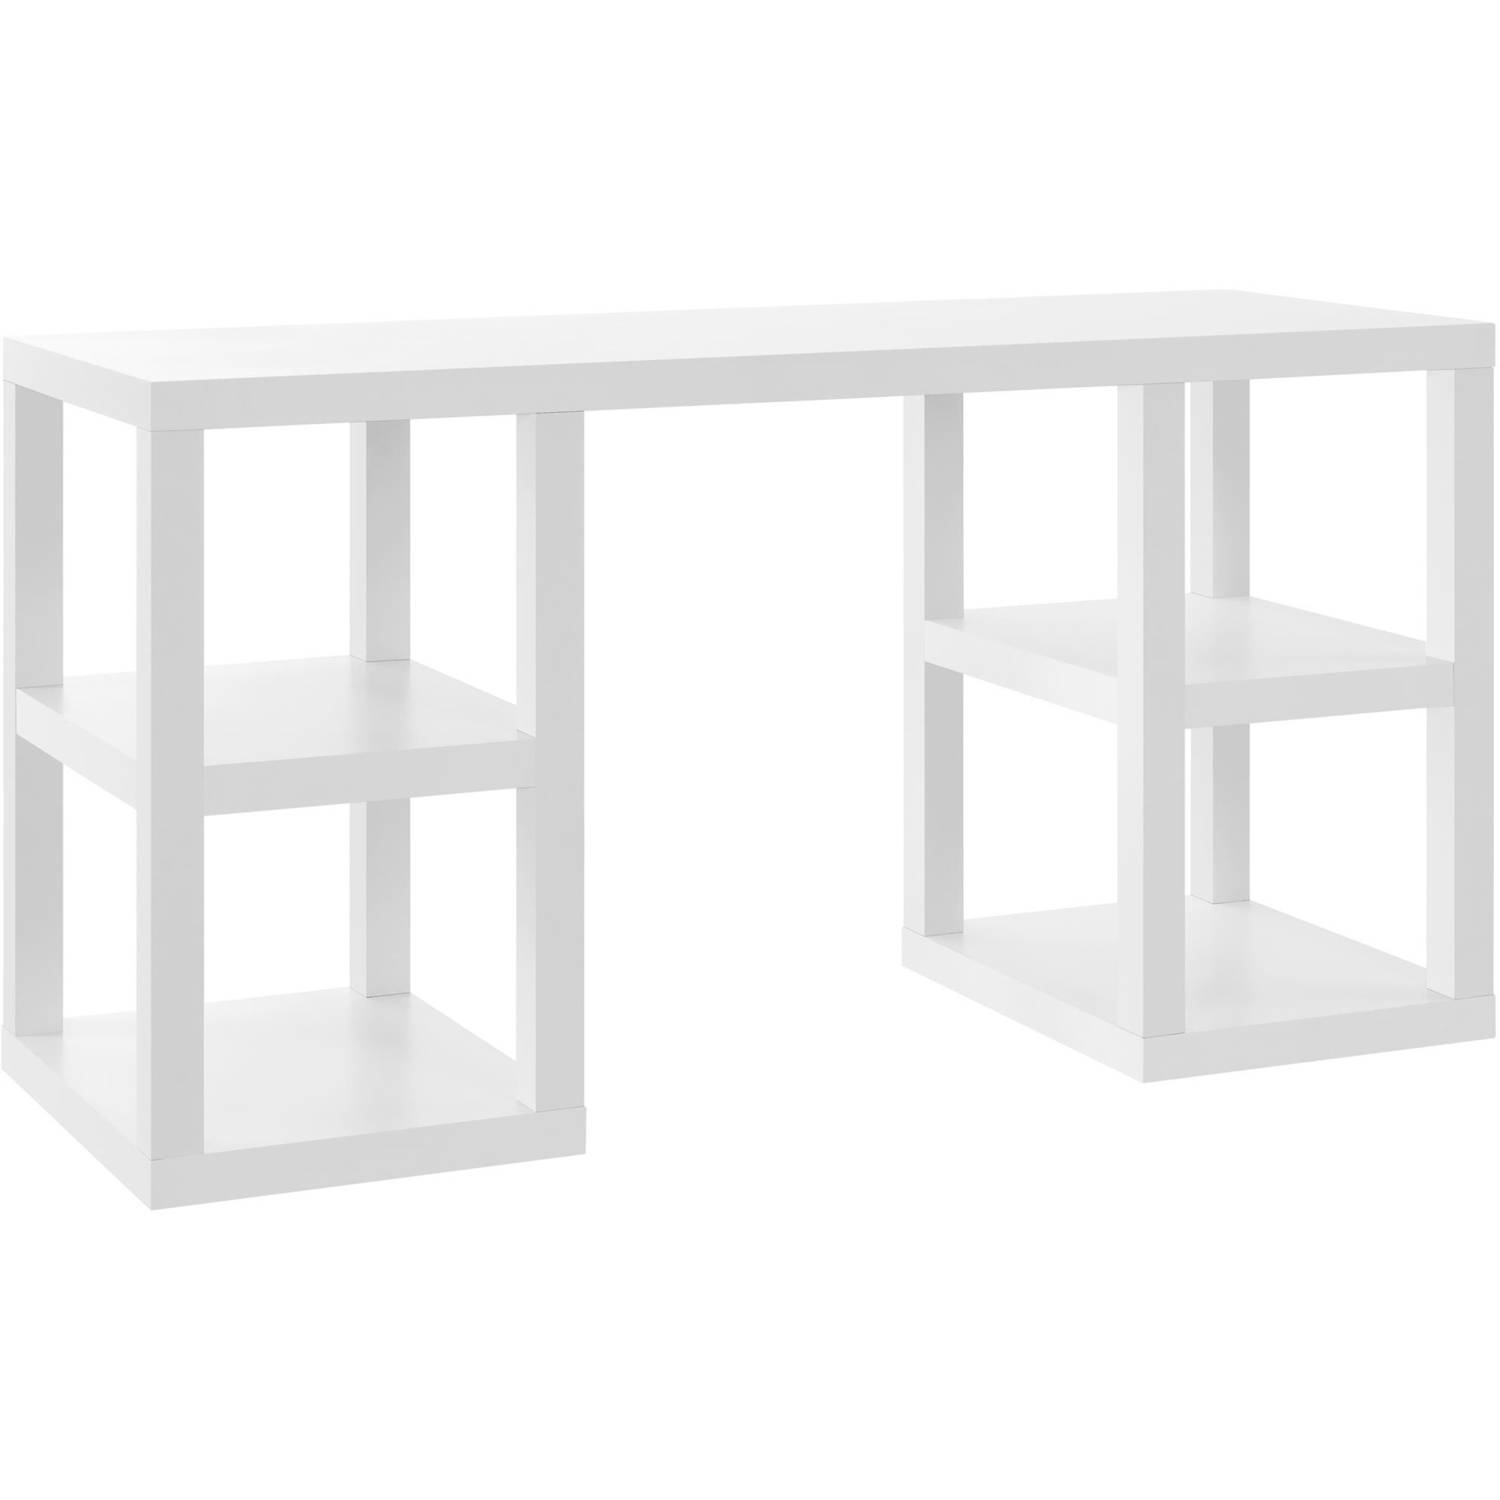 Mainstays Double Pedestal Parsons Desk, White - image 1 of 11